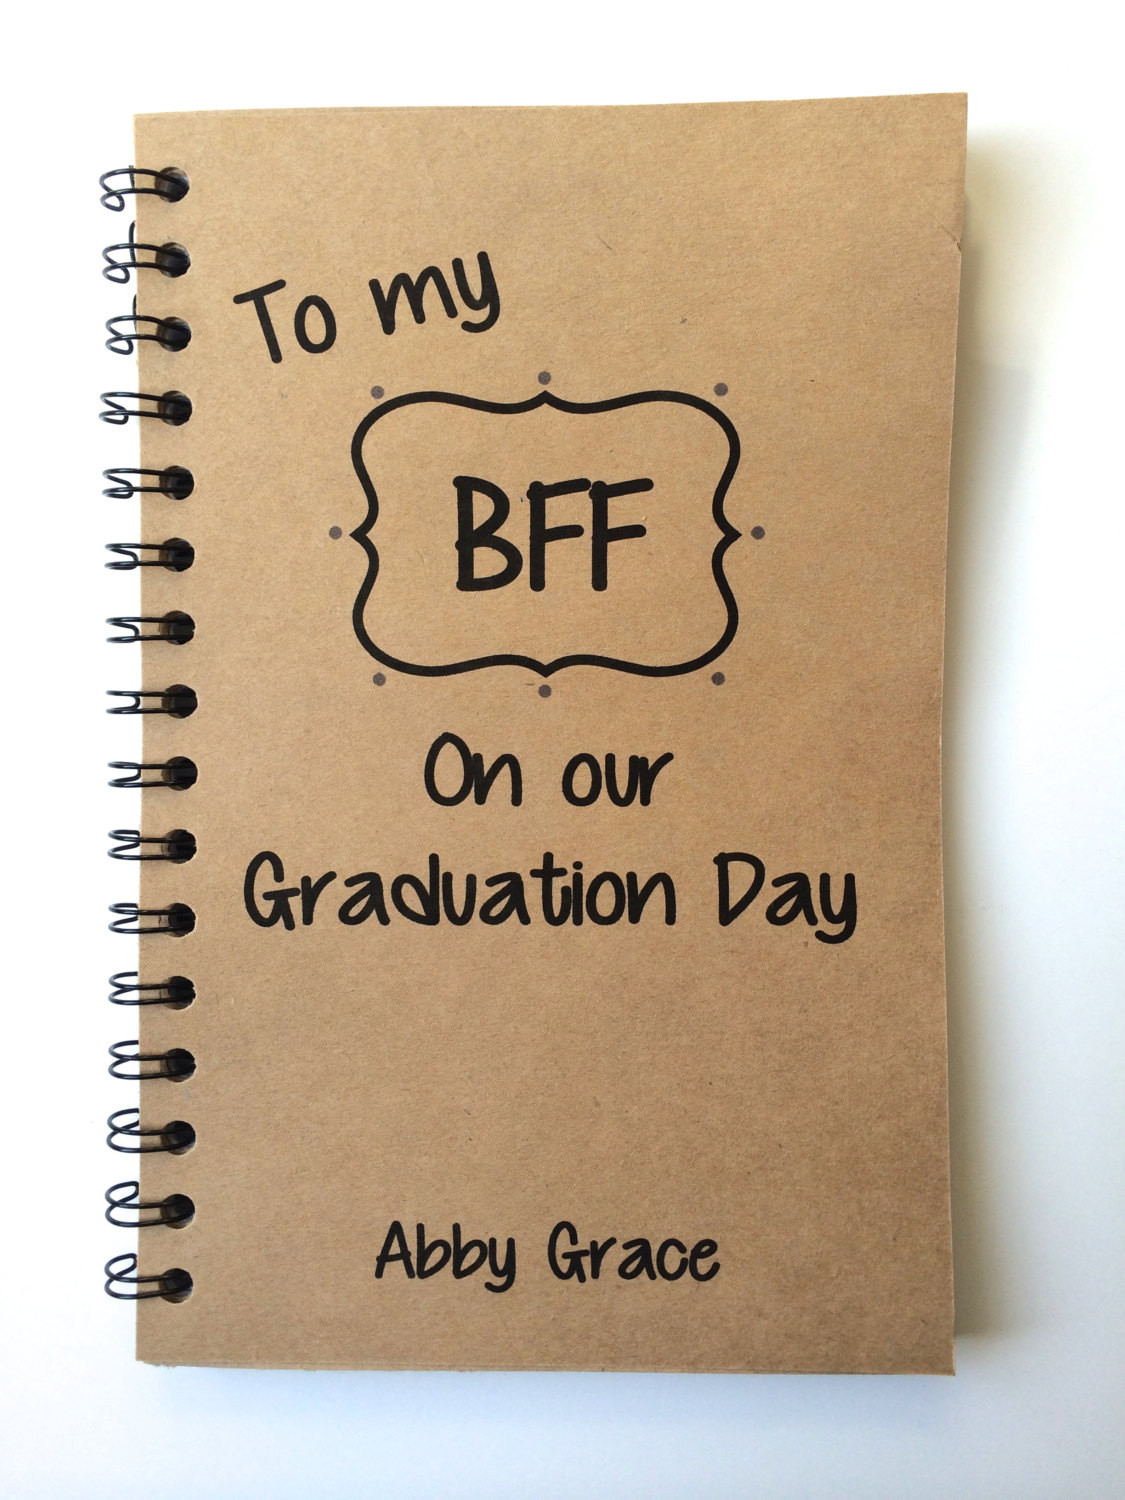 Graduation Gift Ideas For Your Best Friend
 Best Friend Gift Graduation Gift BFF Class of 2016